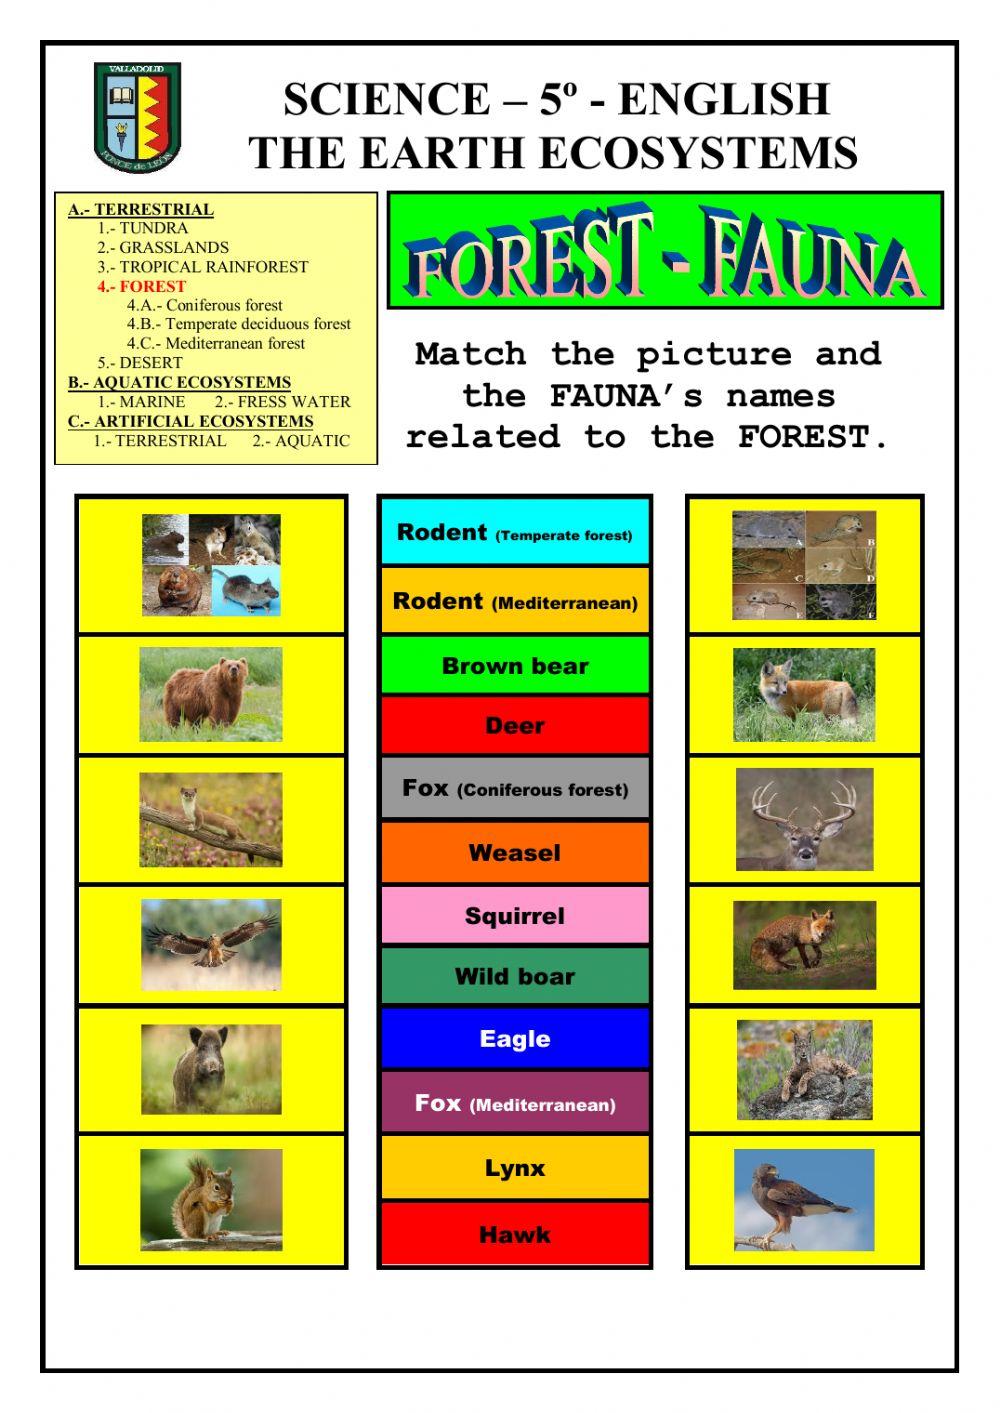 Ecosystems: terrestrial - FOREST (FAUNA)